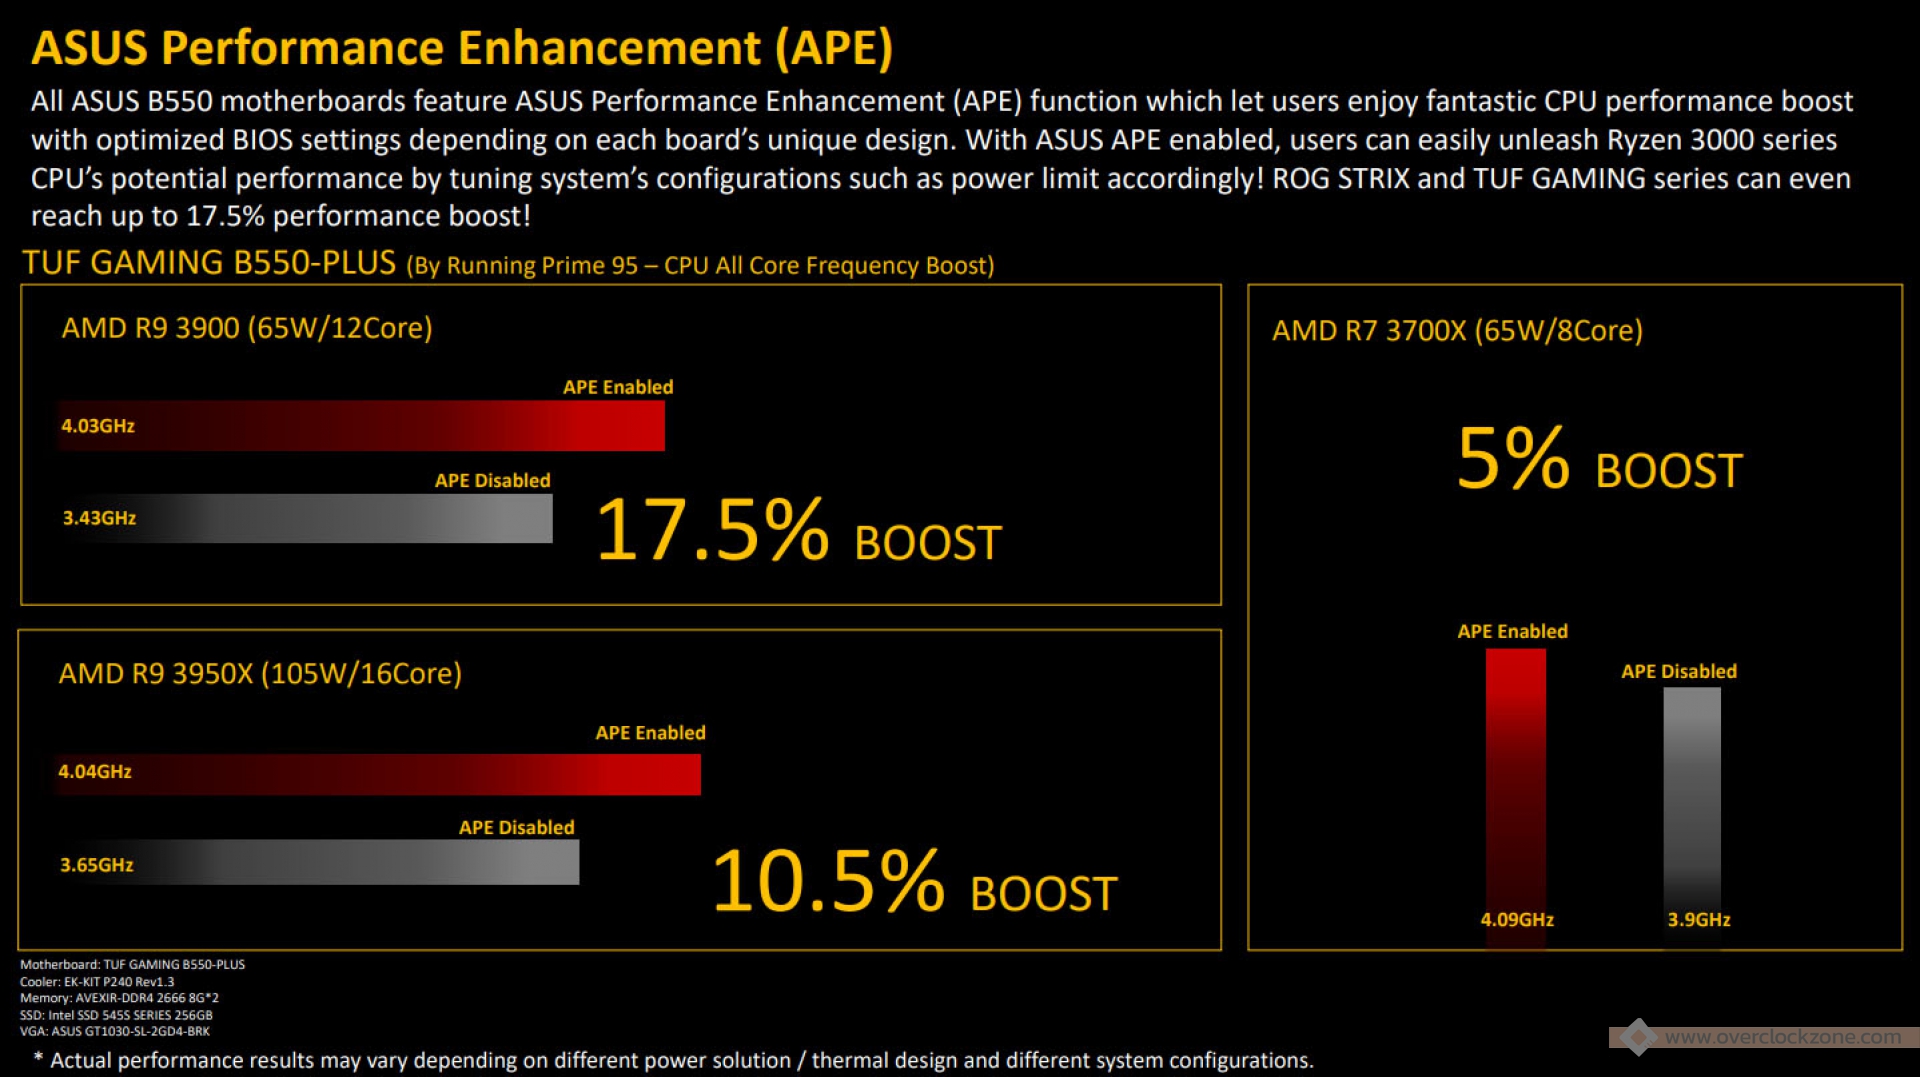 Asus performance. ASUS Performance Enhancement. ASUS Performance Enhancement BIOS. ASUS Performance Enhancement 2.0. CPU Performance Boost.